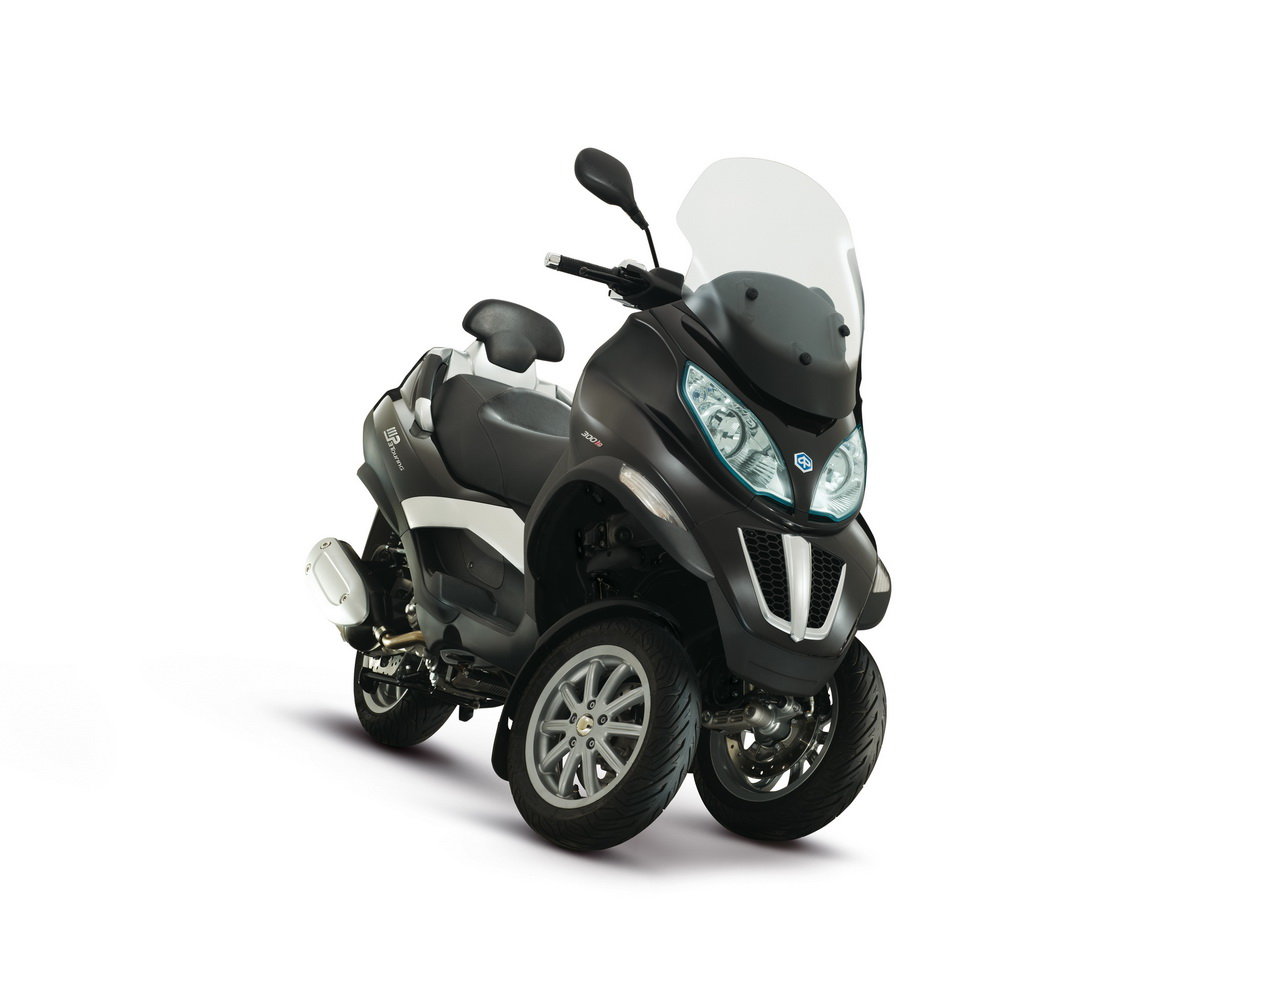 Listino Piaggio MP3 400 ie Touring LT Scooter oltre 300 - image 15113_piaggio-mp3400-ie-touring-lt on https://moto.motori.net